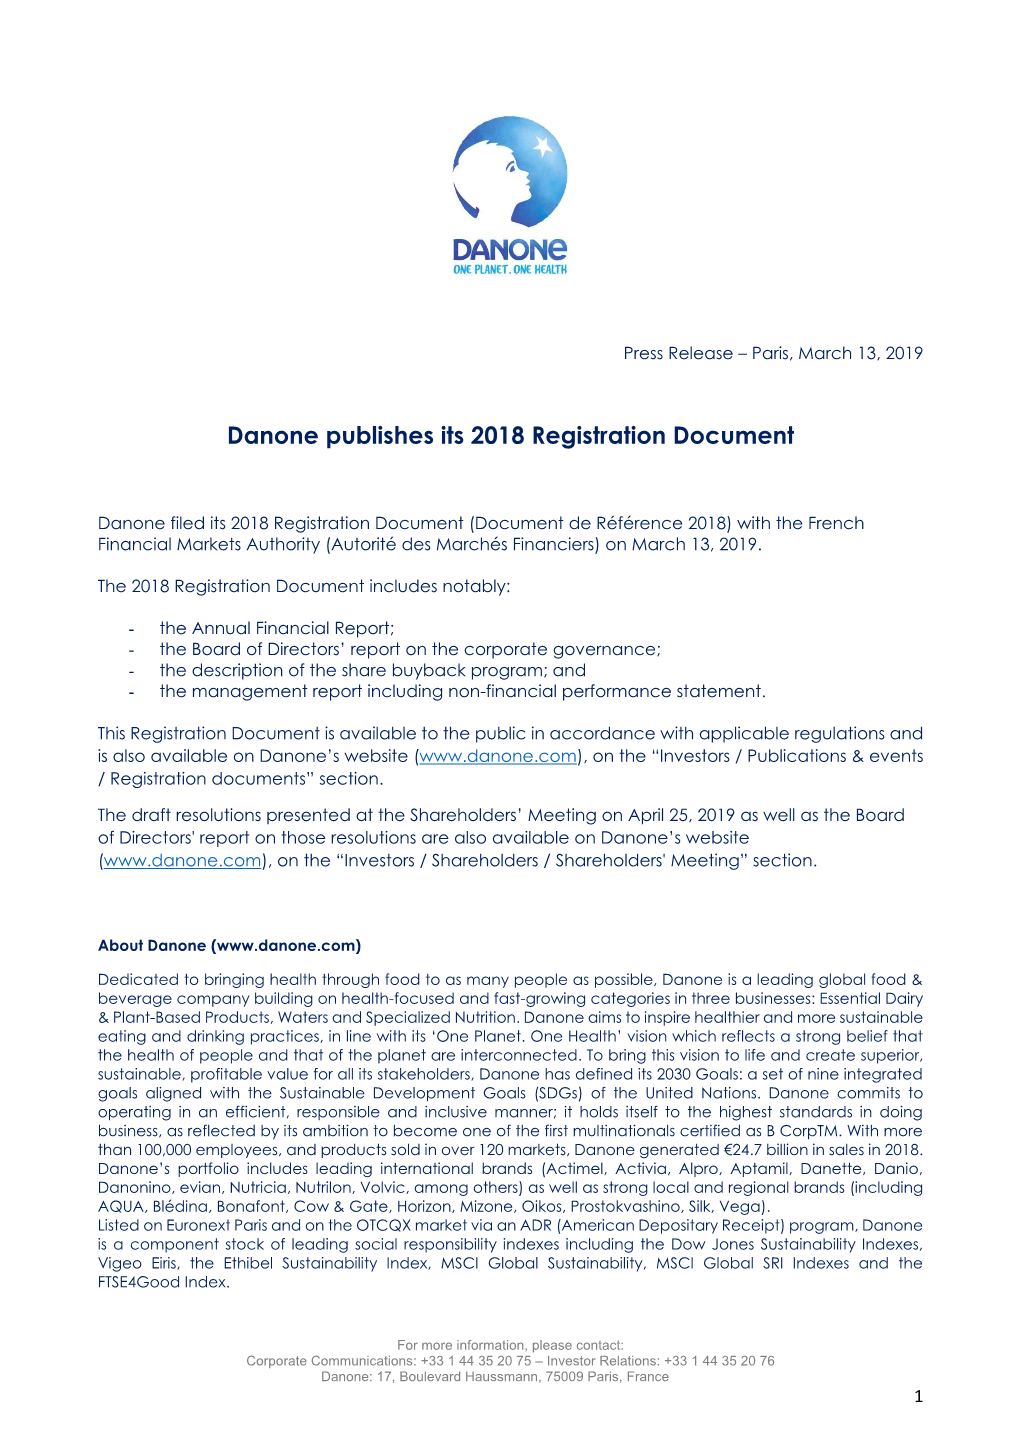 Danone Publishes Its 2018 Registration Document